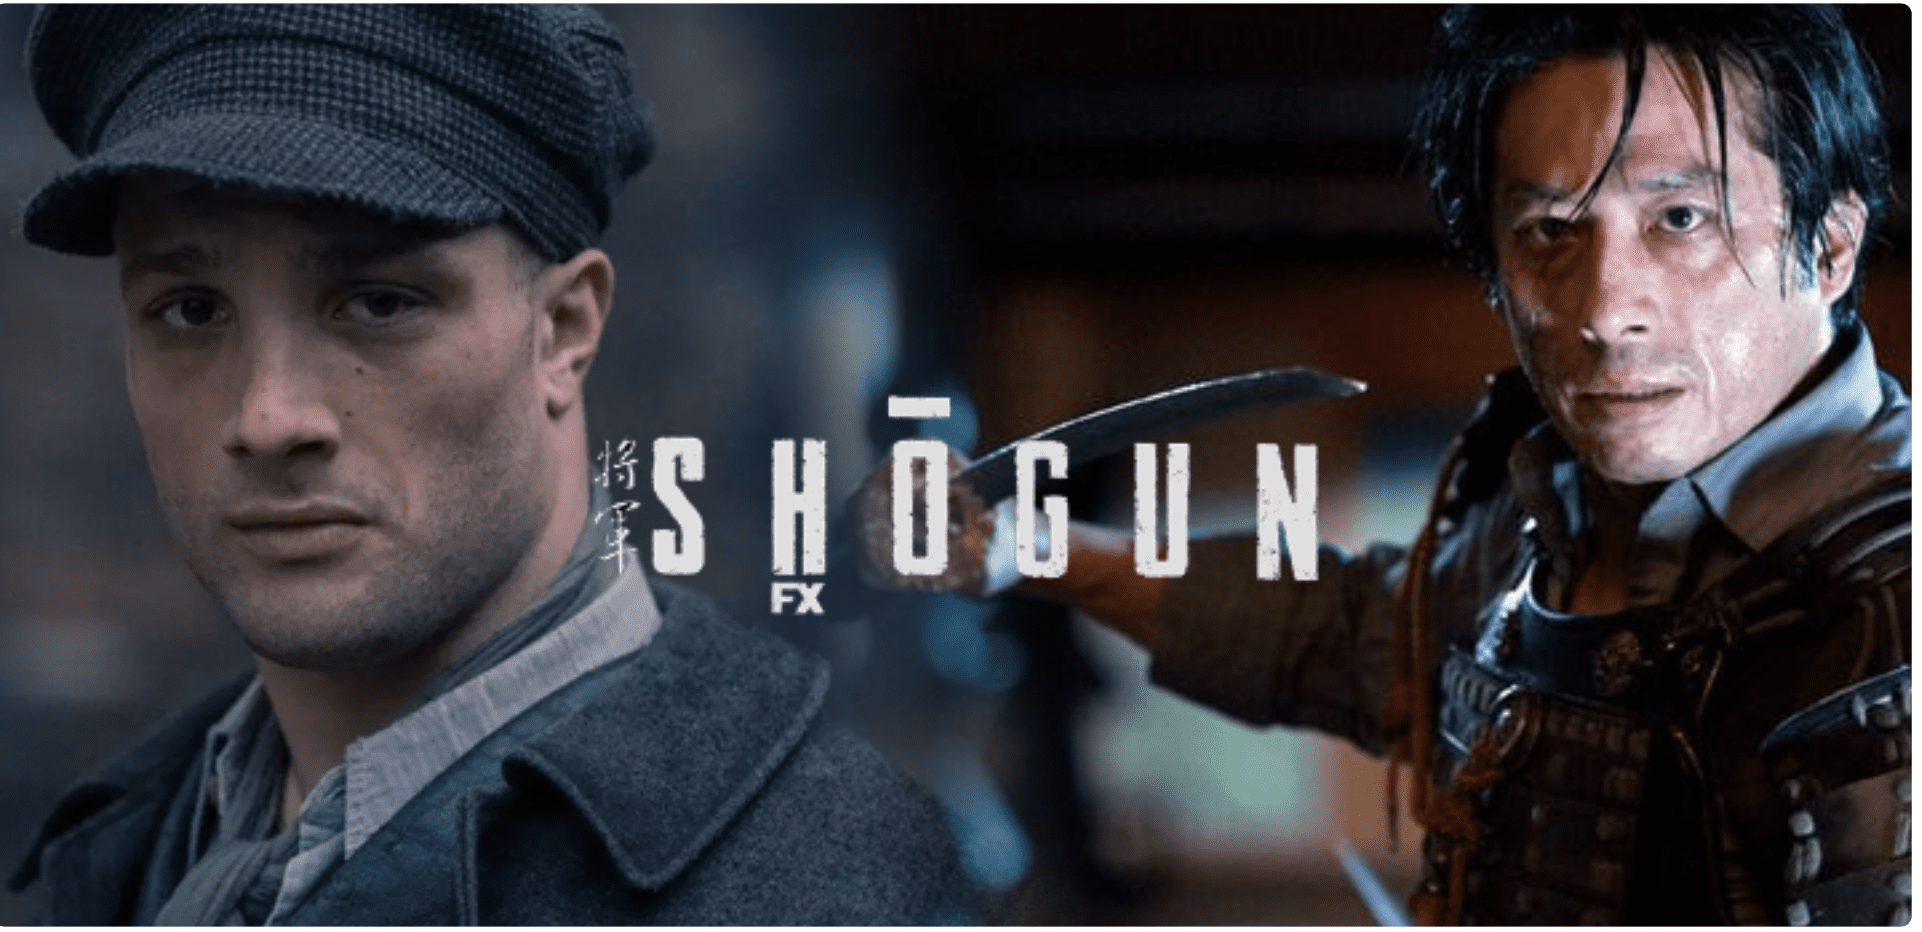 Shogun FX tv show